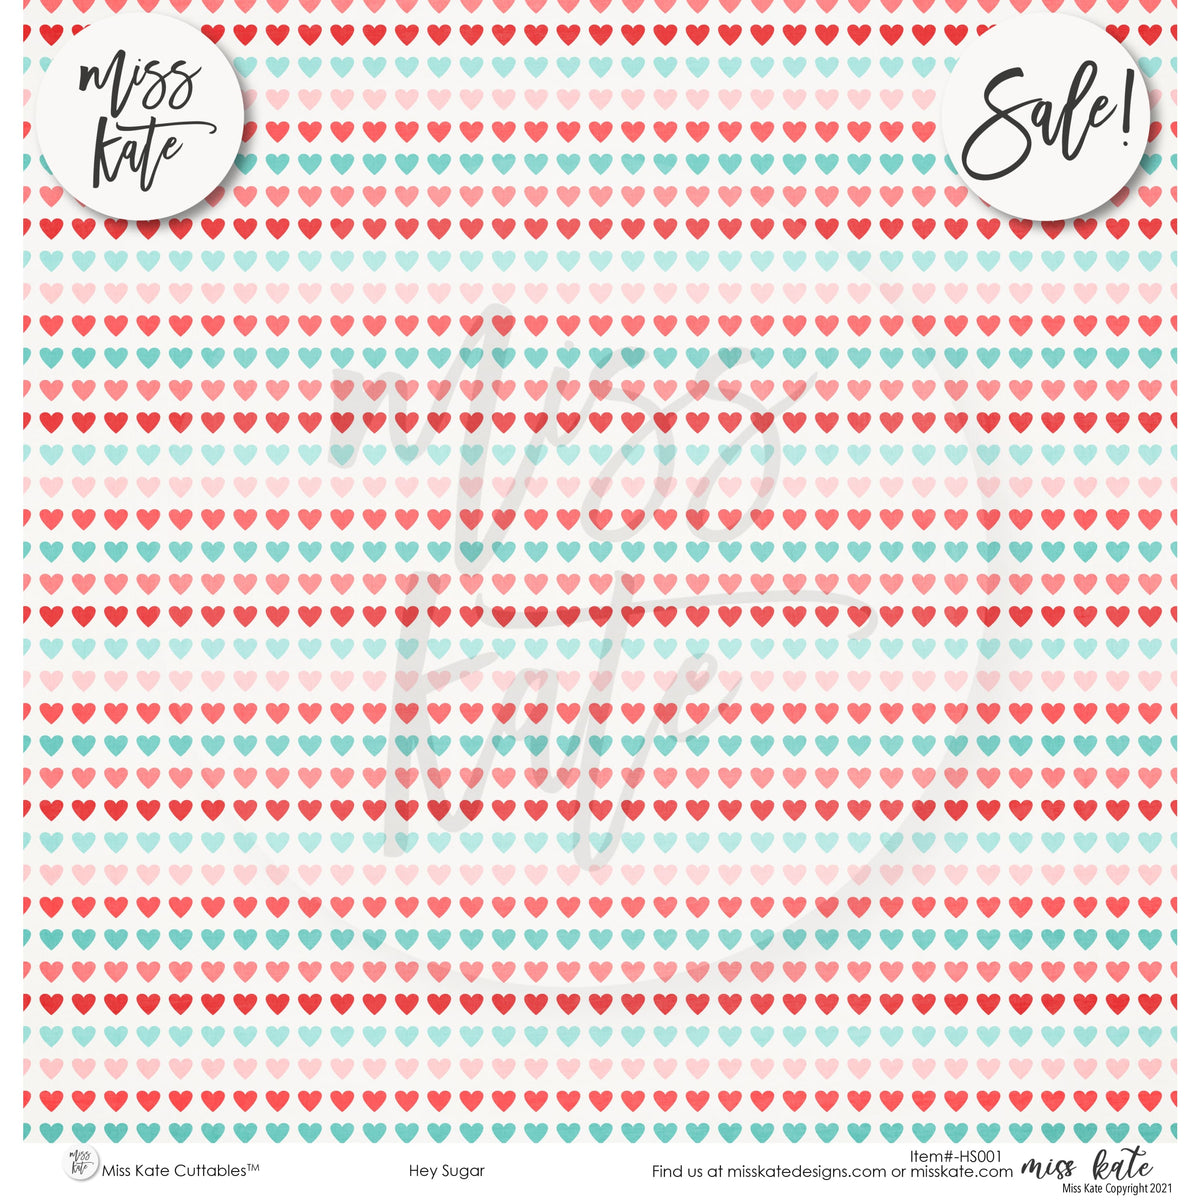 Dog Gone Cute - Scrapbook Paper & Sticker Kit 12x12 Paper & Sticker – MISS  KATE